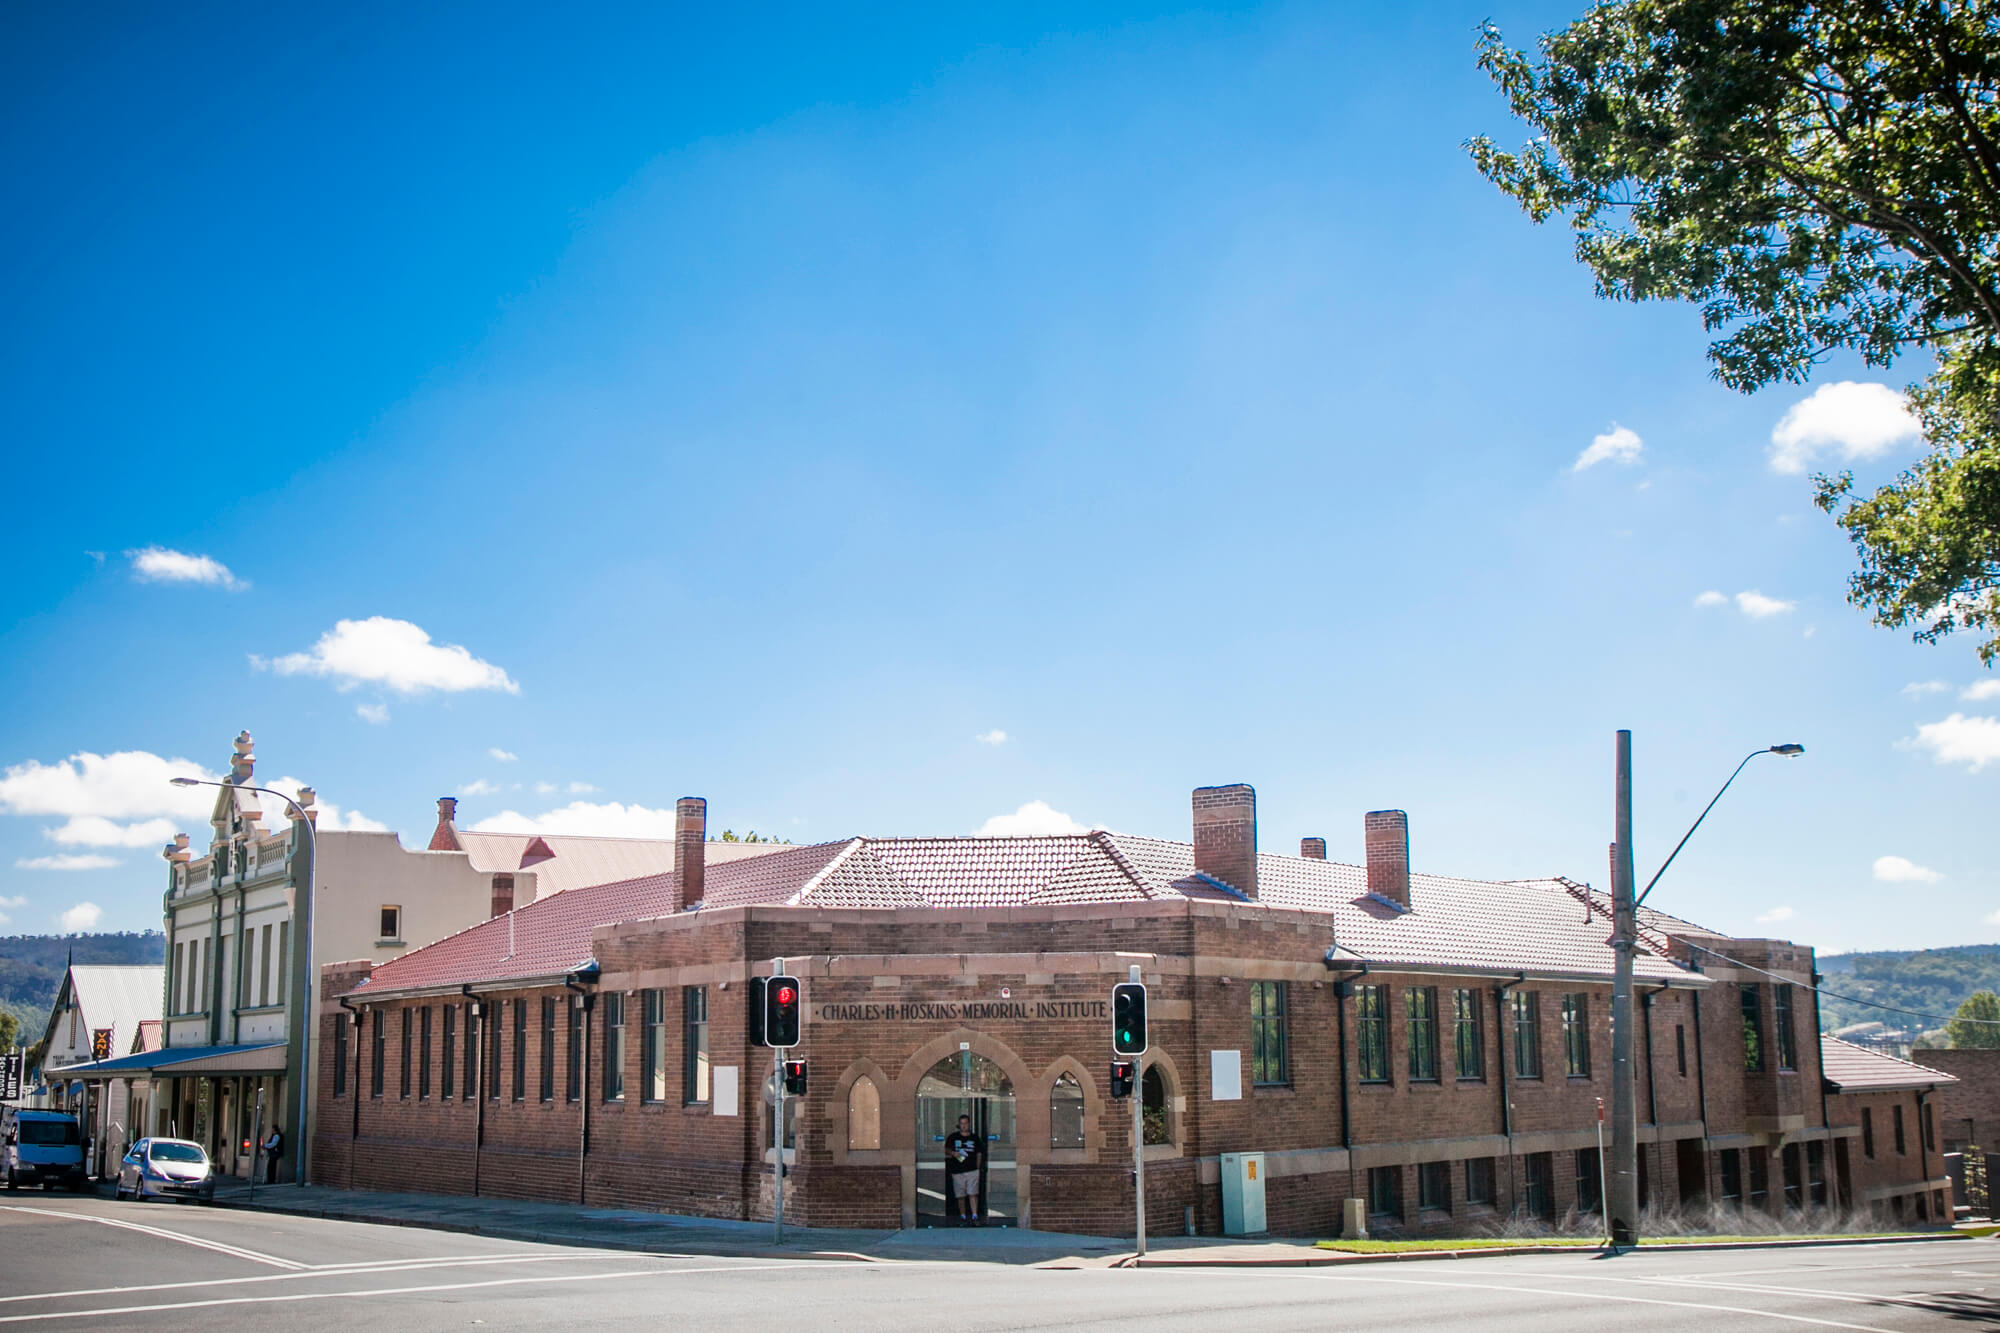 Western Sydney University's Lithgow campus